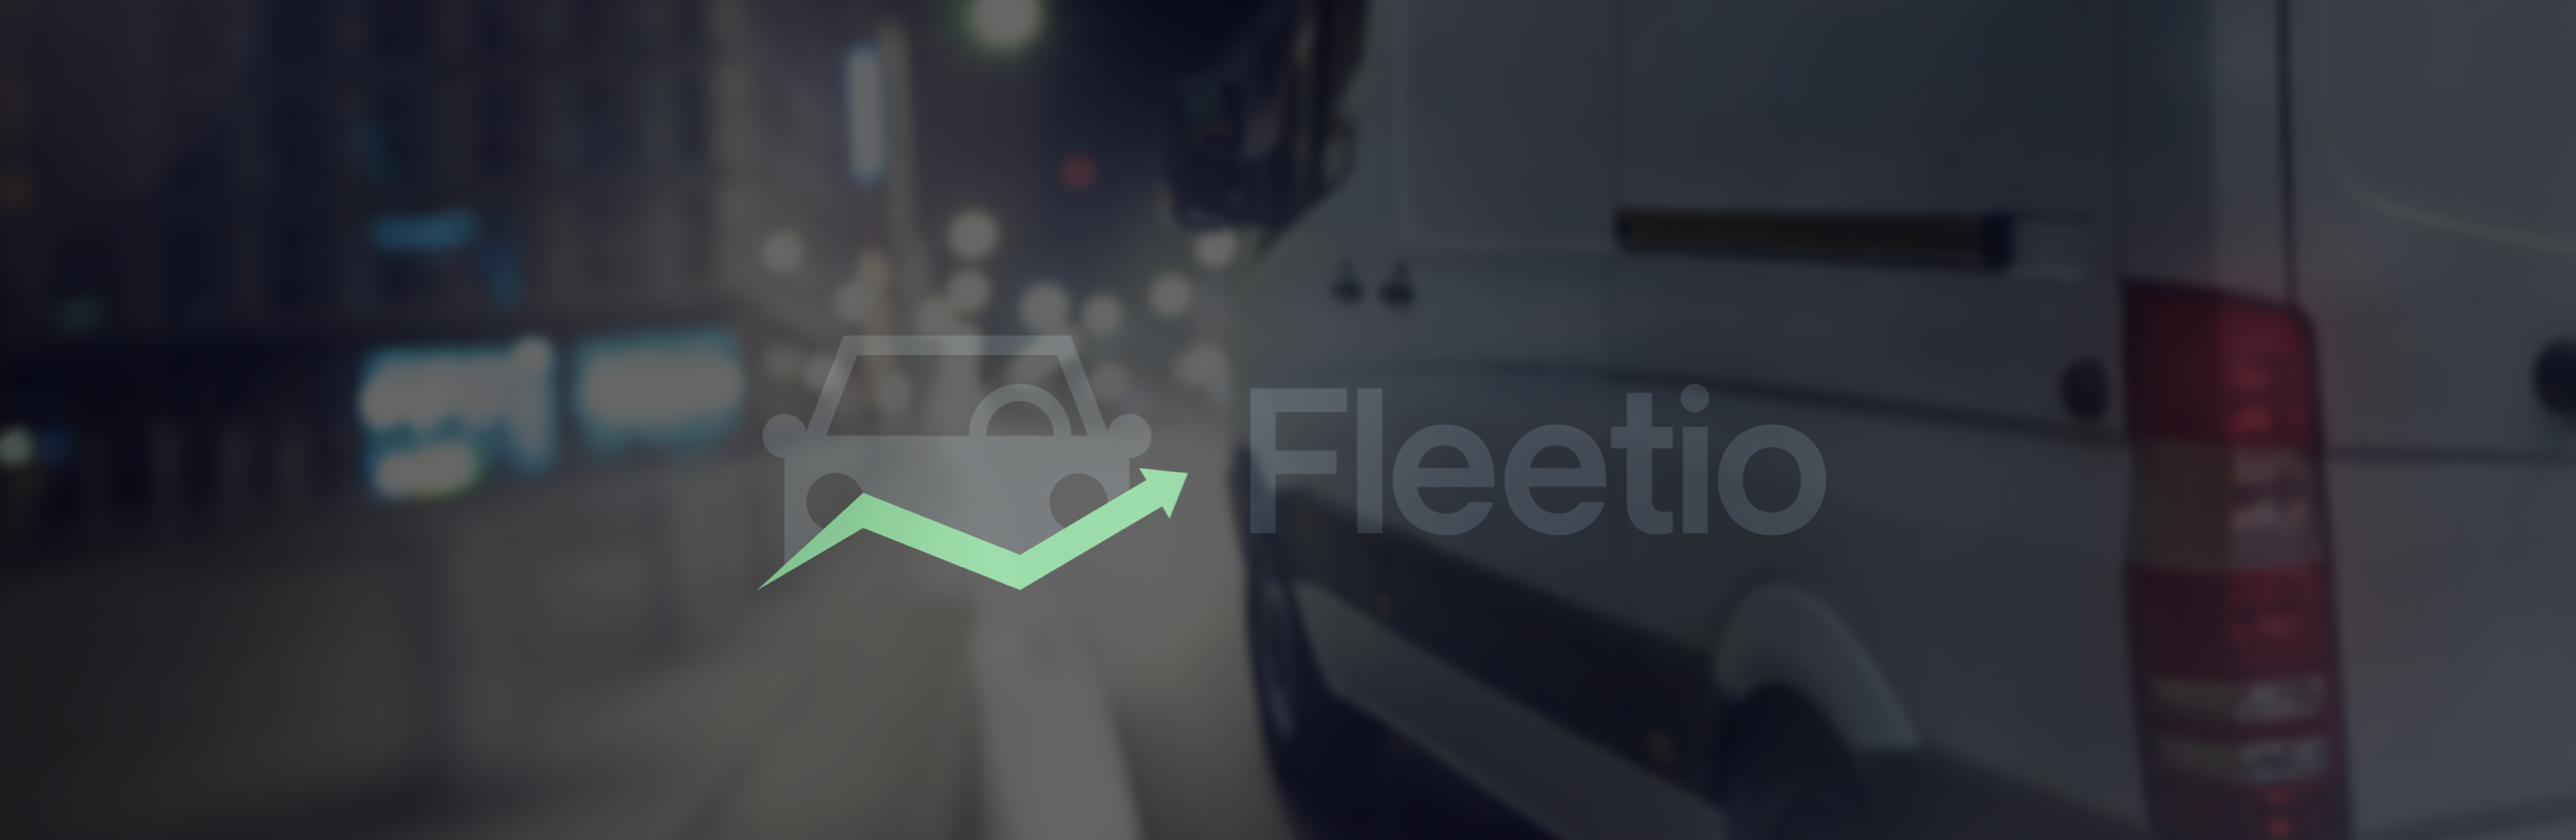 Fleetio brand on blurred urban streetscape background